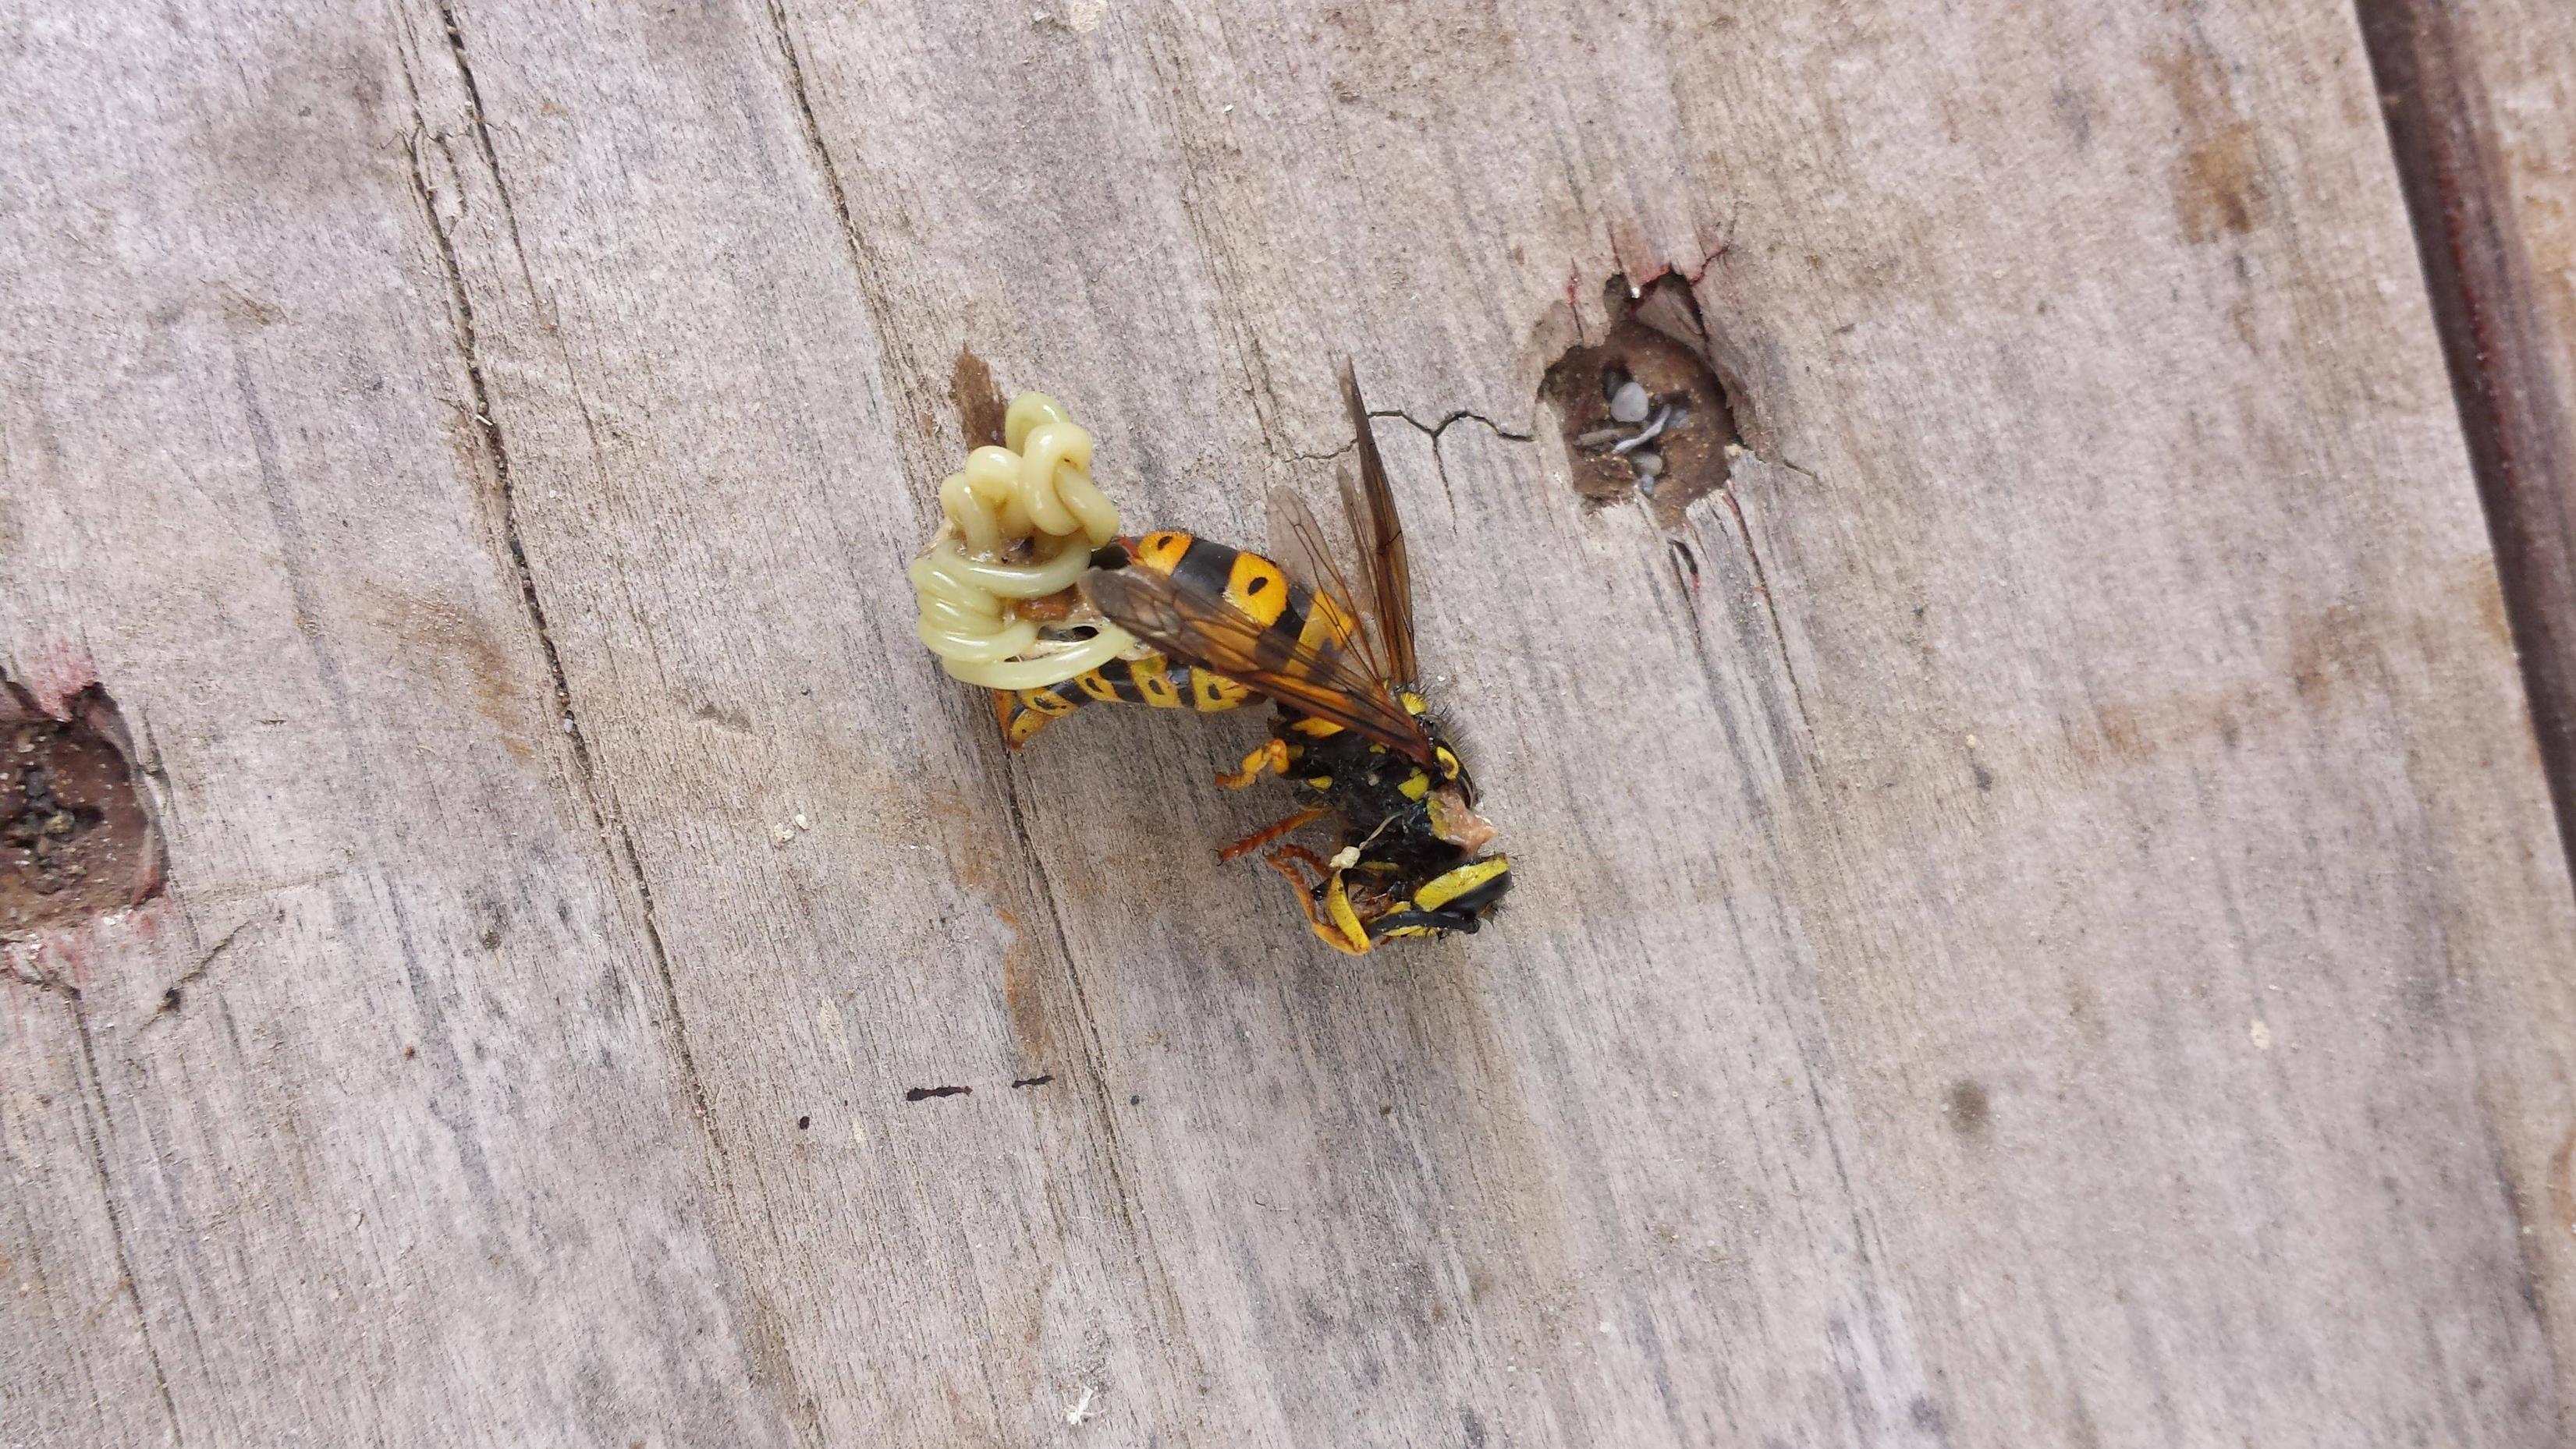 parisite found in a wasp